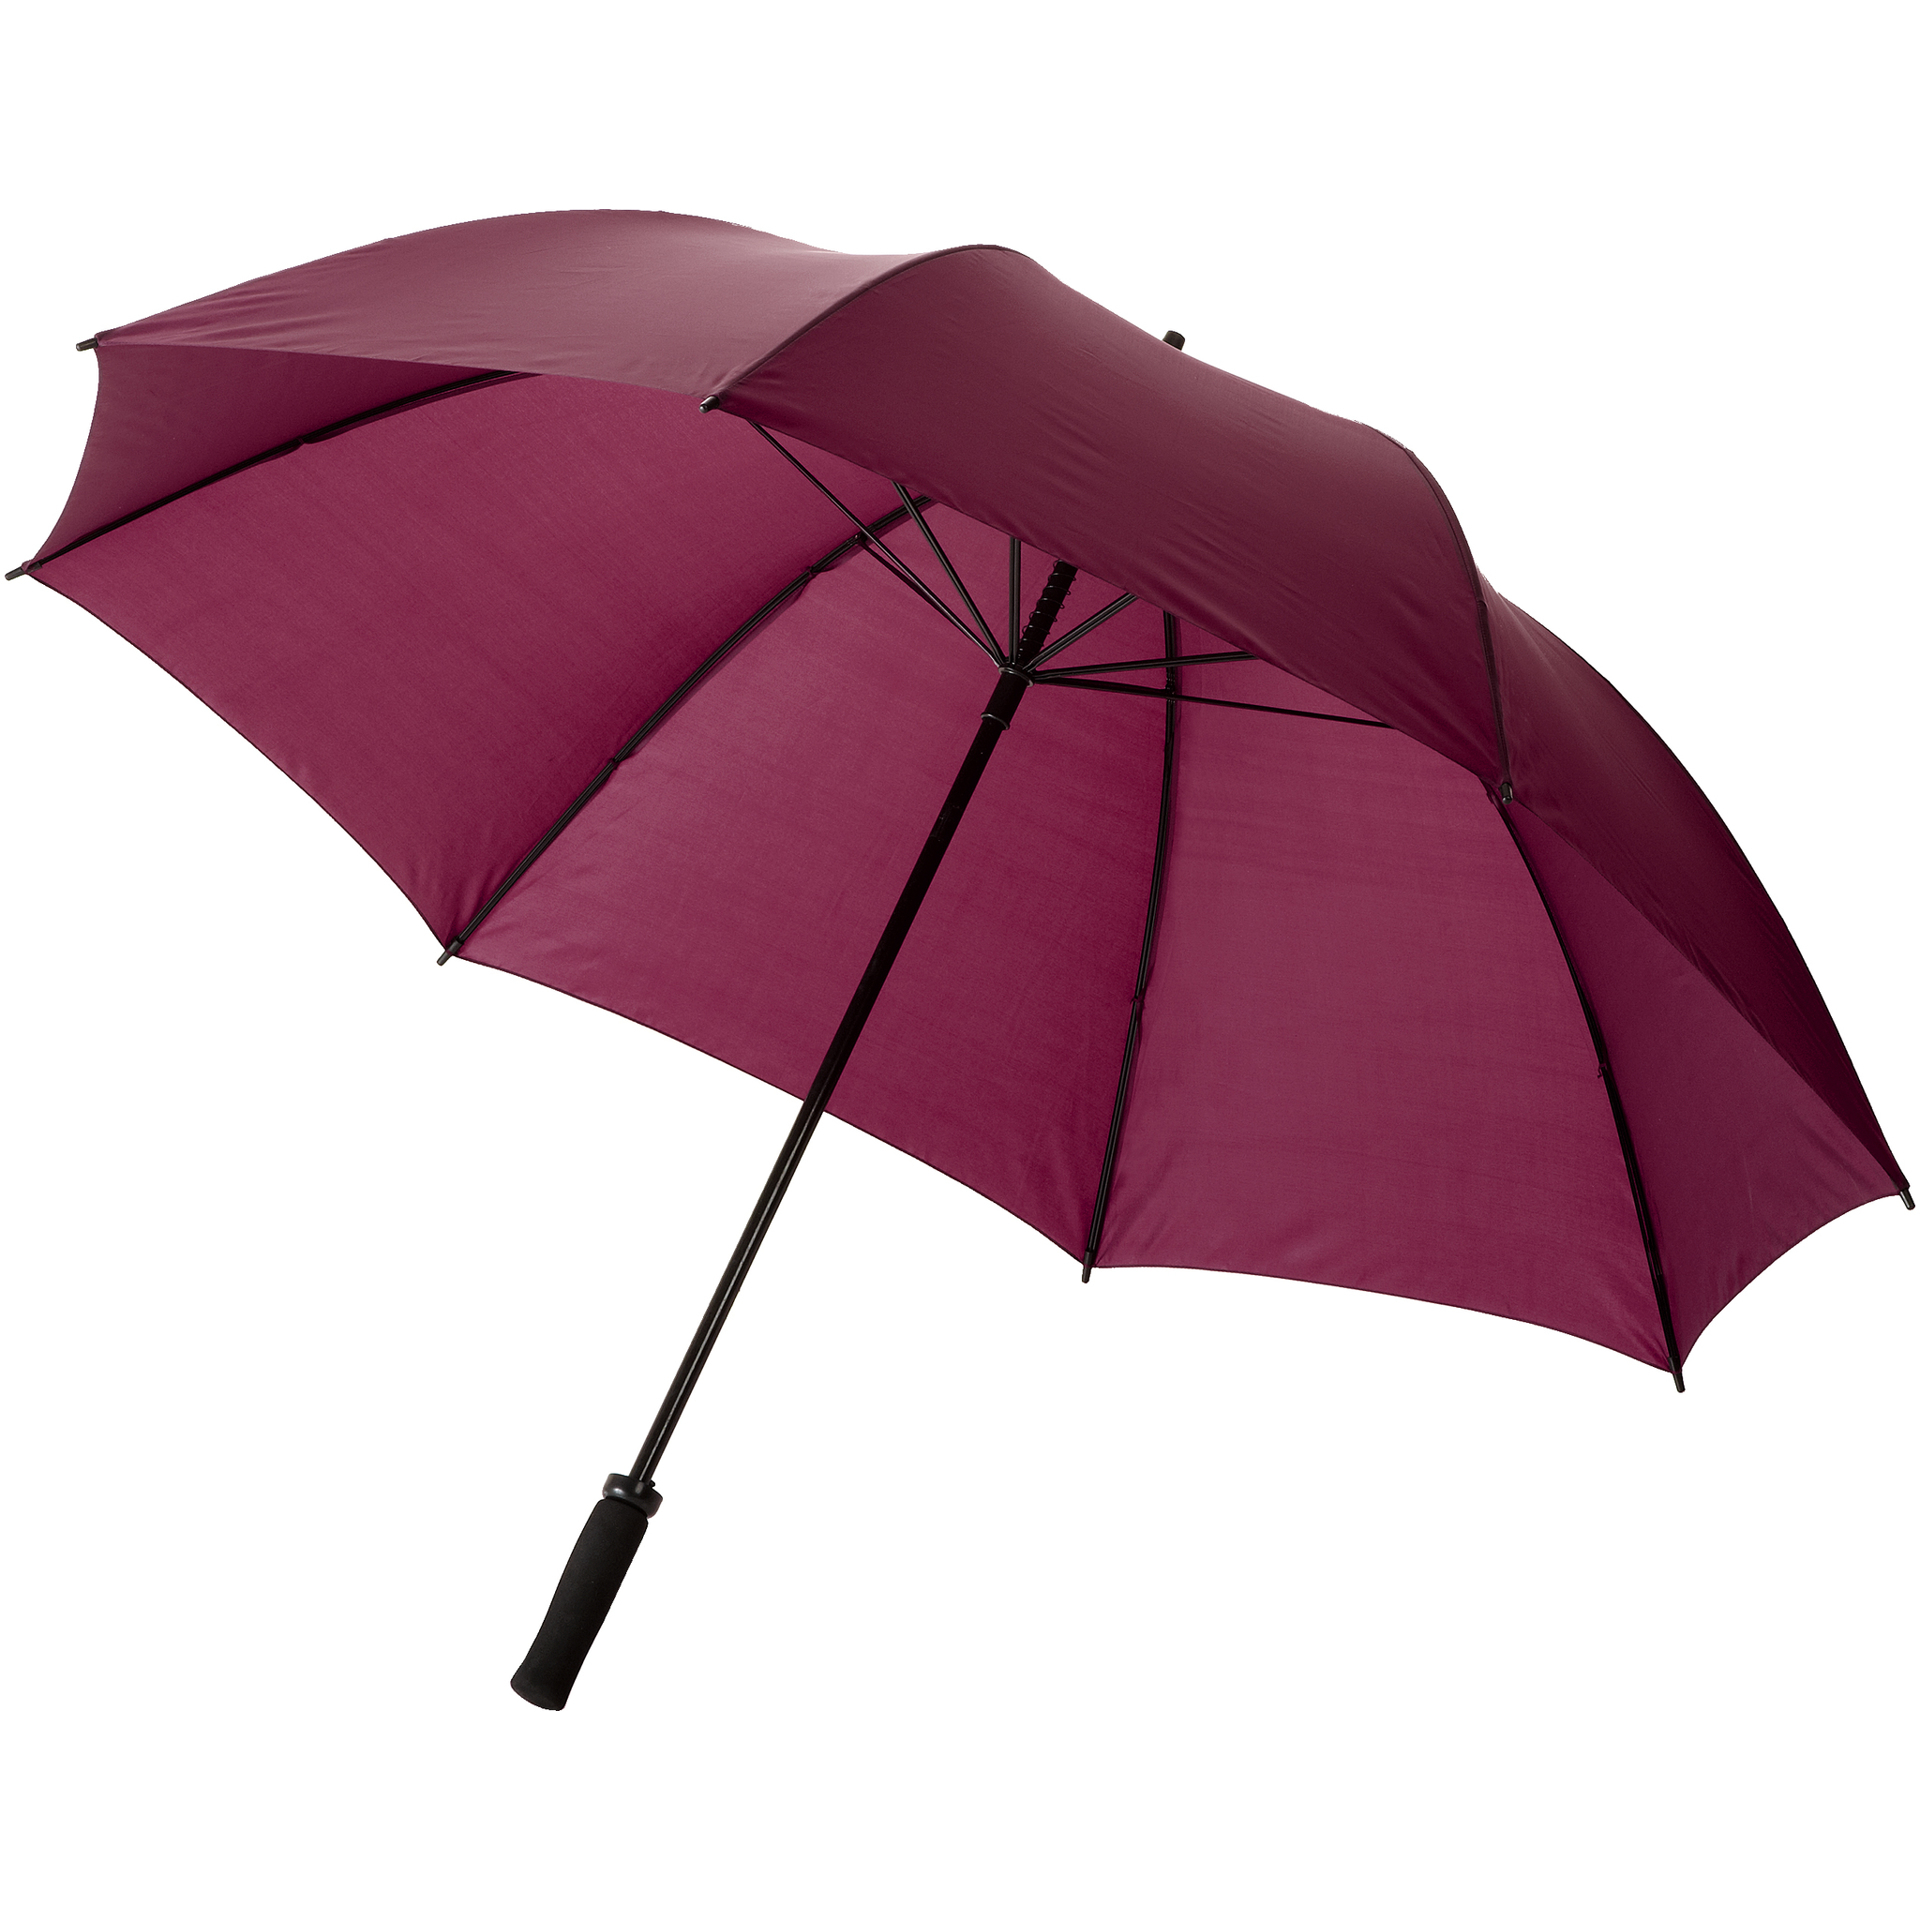 Storm Umbrella in burgundy